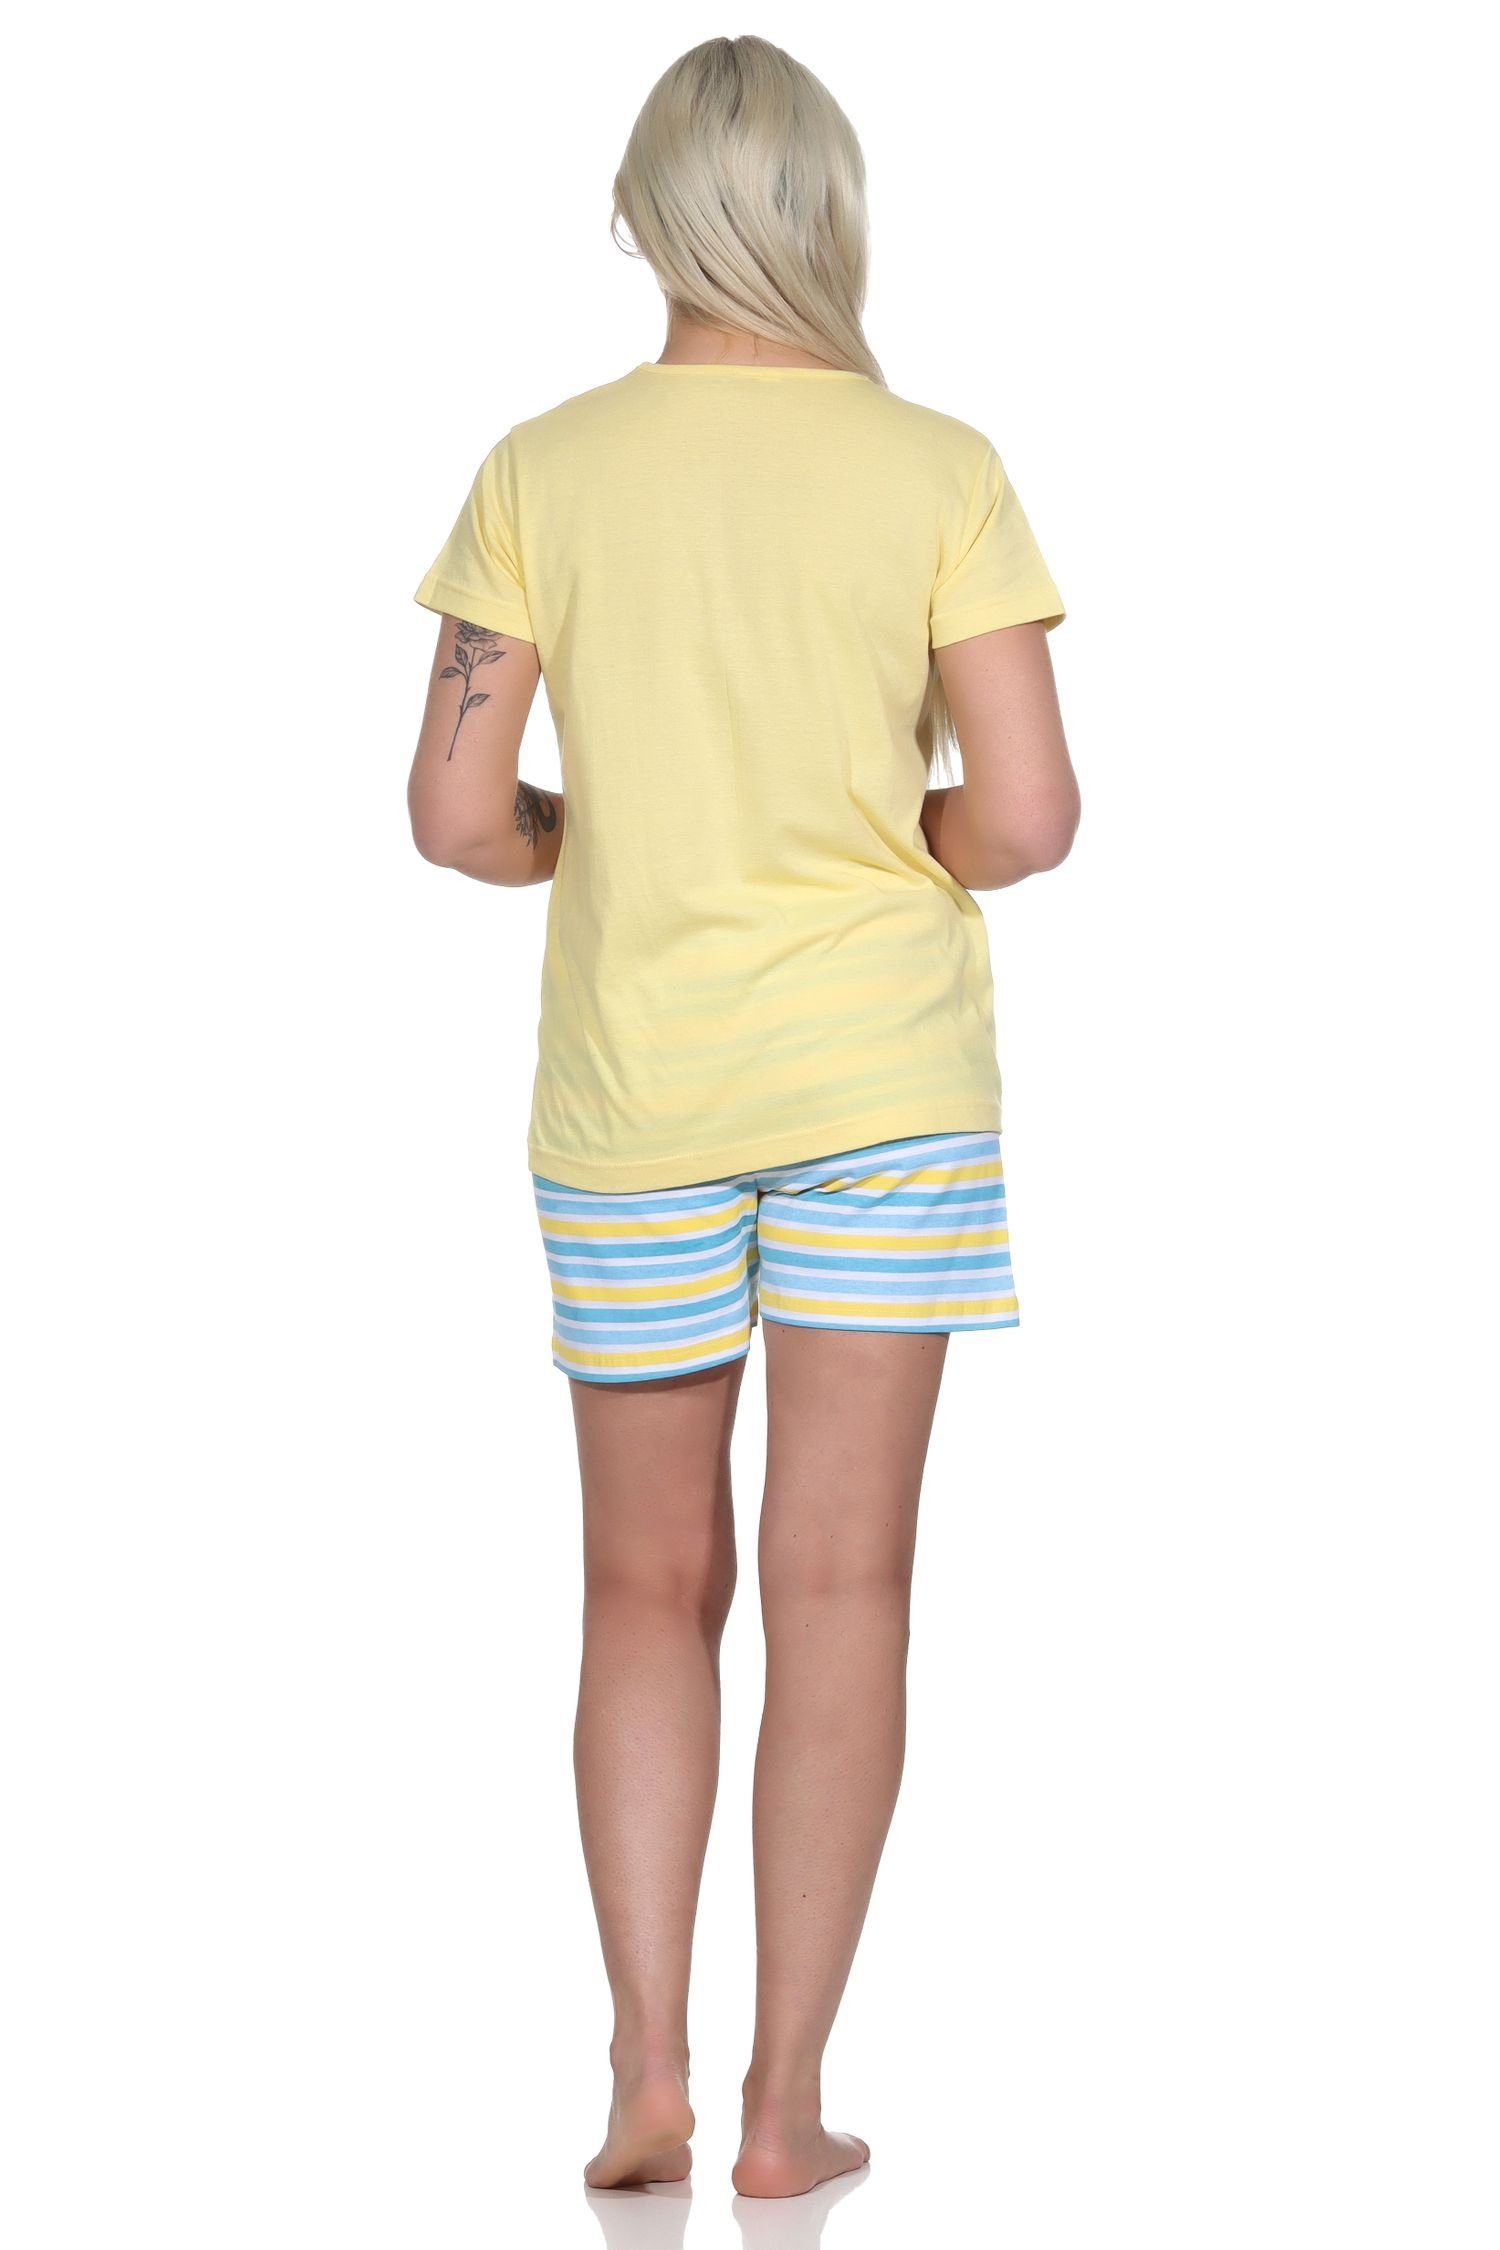 kurzarm Pyjama Front-Print Shorty Normann RELAX und gelb Damen Pyjama Ringel-Optik mit by